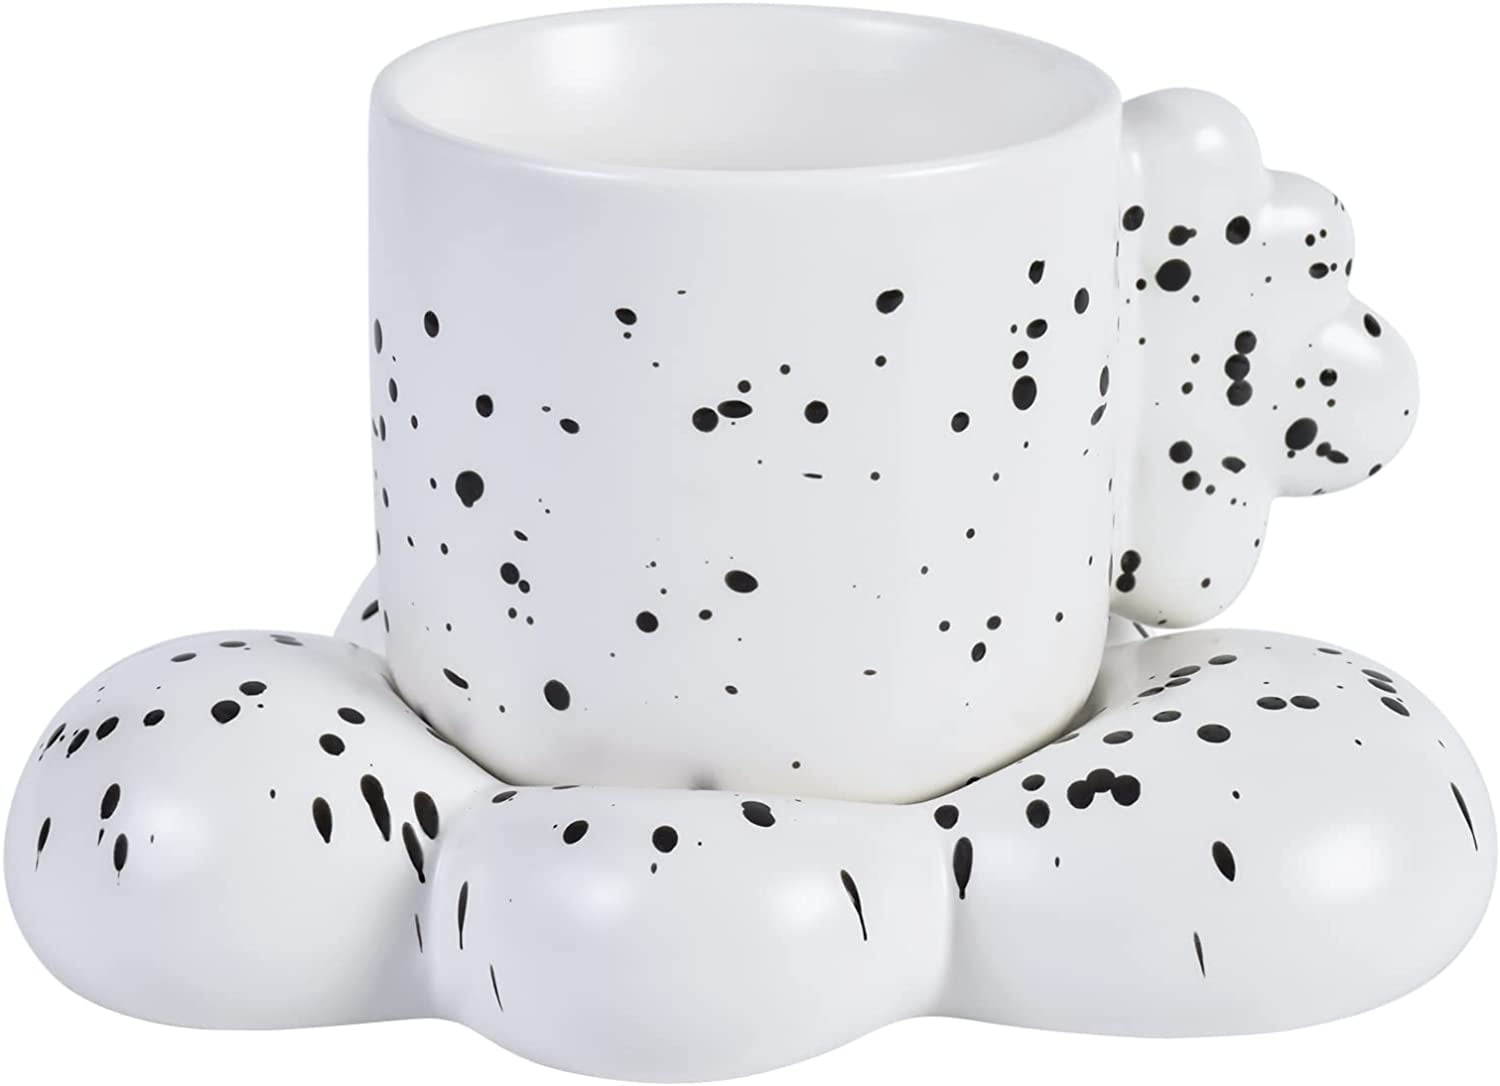 Vidalenta Ceramic Coffee Mug with Saucer, Cute Cloud Mug and Heart Shaped Saucer, 10 oz Espresso Cups Cappuccino Cups Chubby Funny Coffee Cup